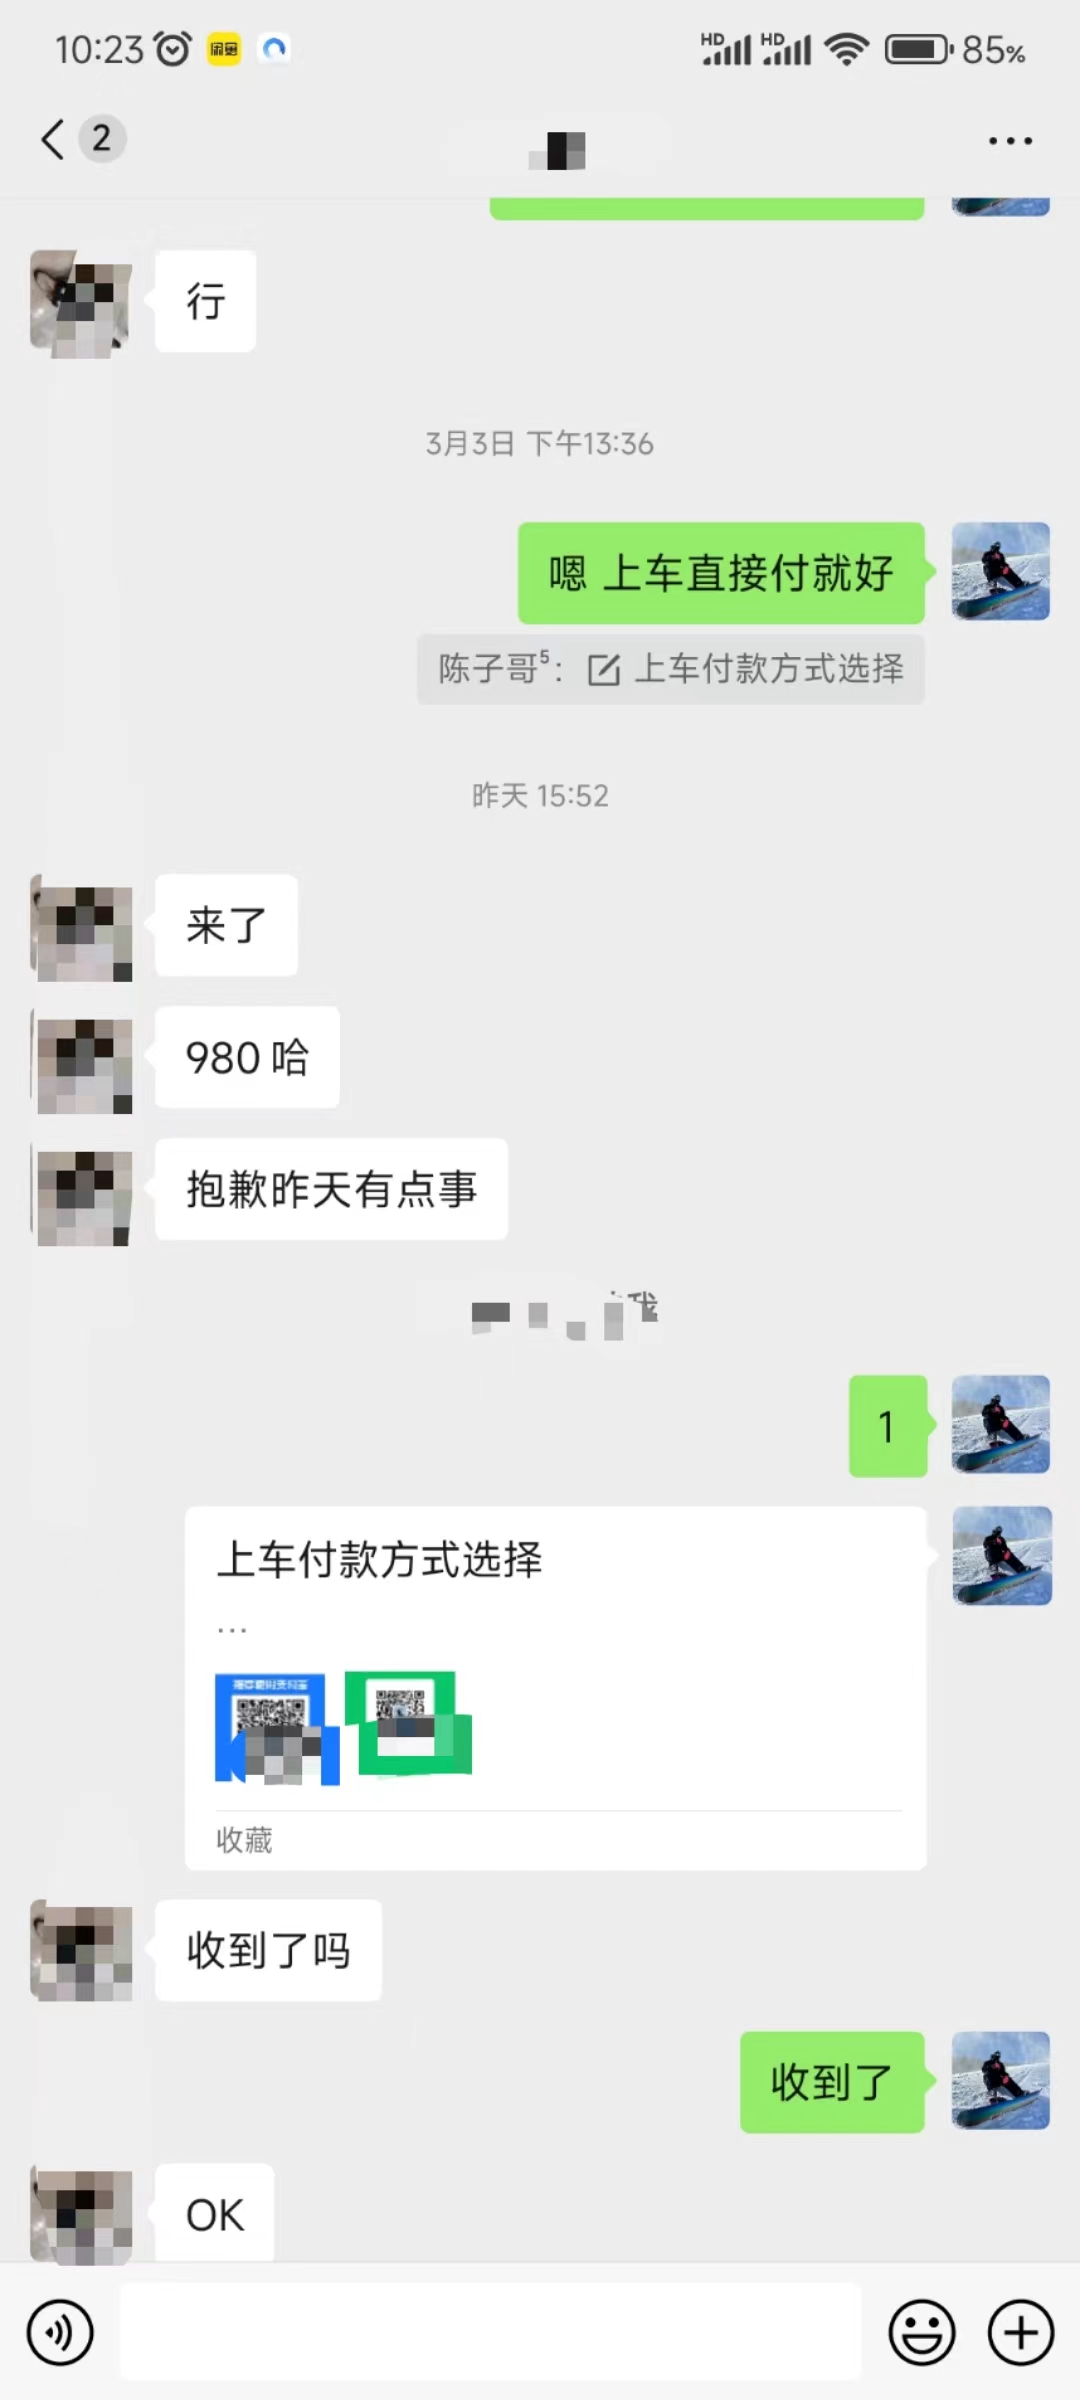 QQ无人直播 新赛道新玩法 一天轻松500+ 腾讯官方流量扶持(图3)